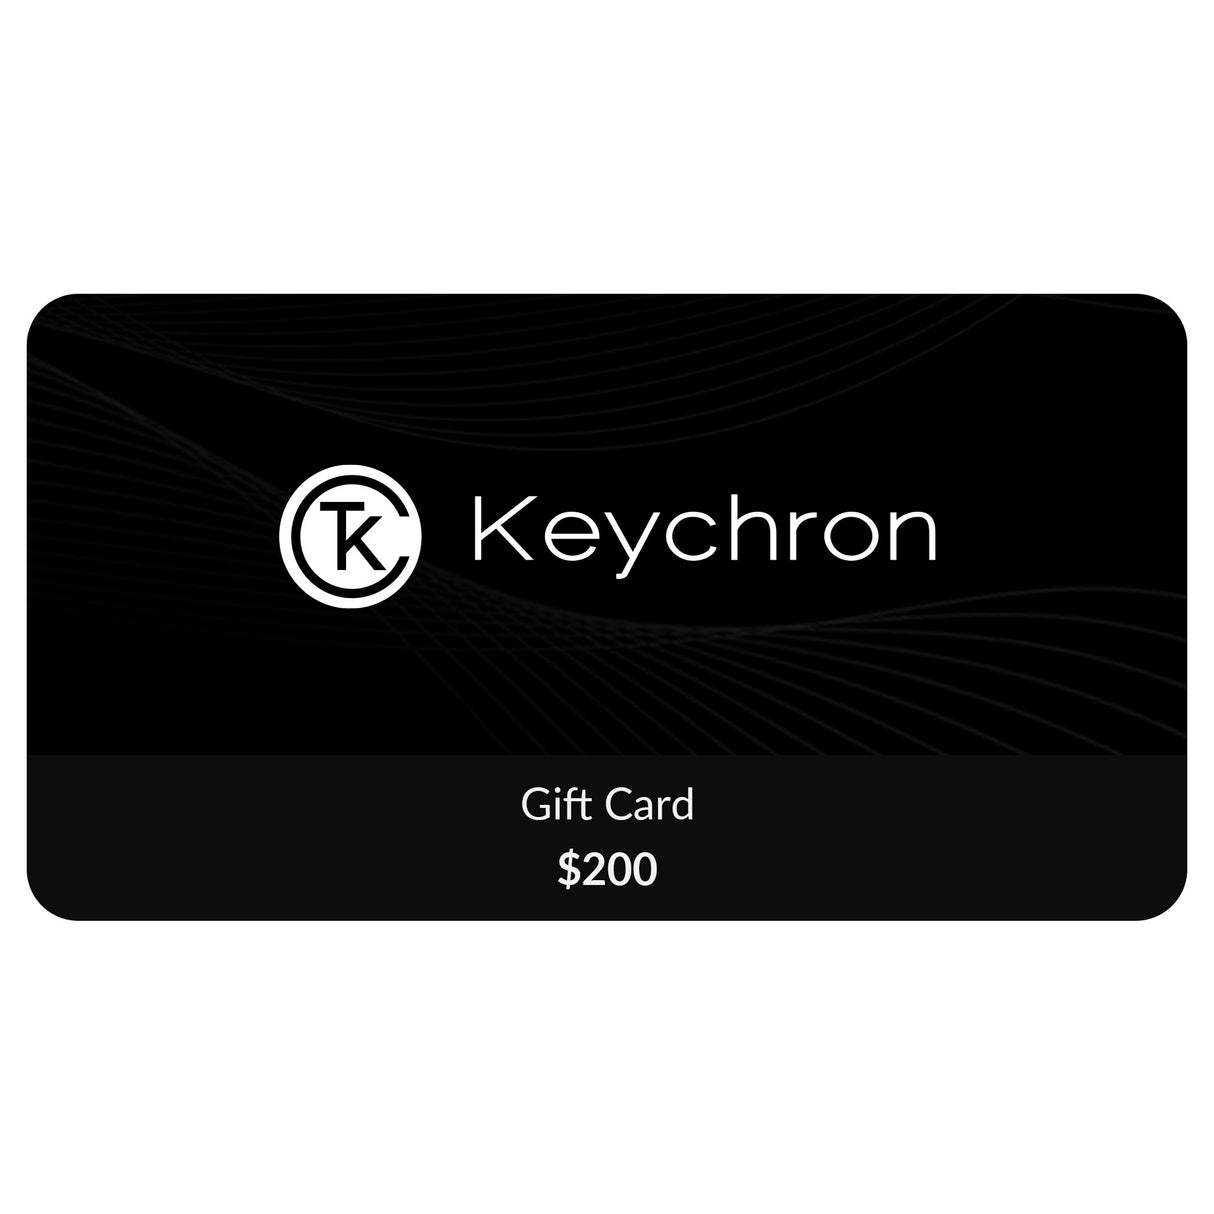 Keychron Gift Card